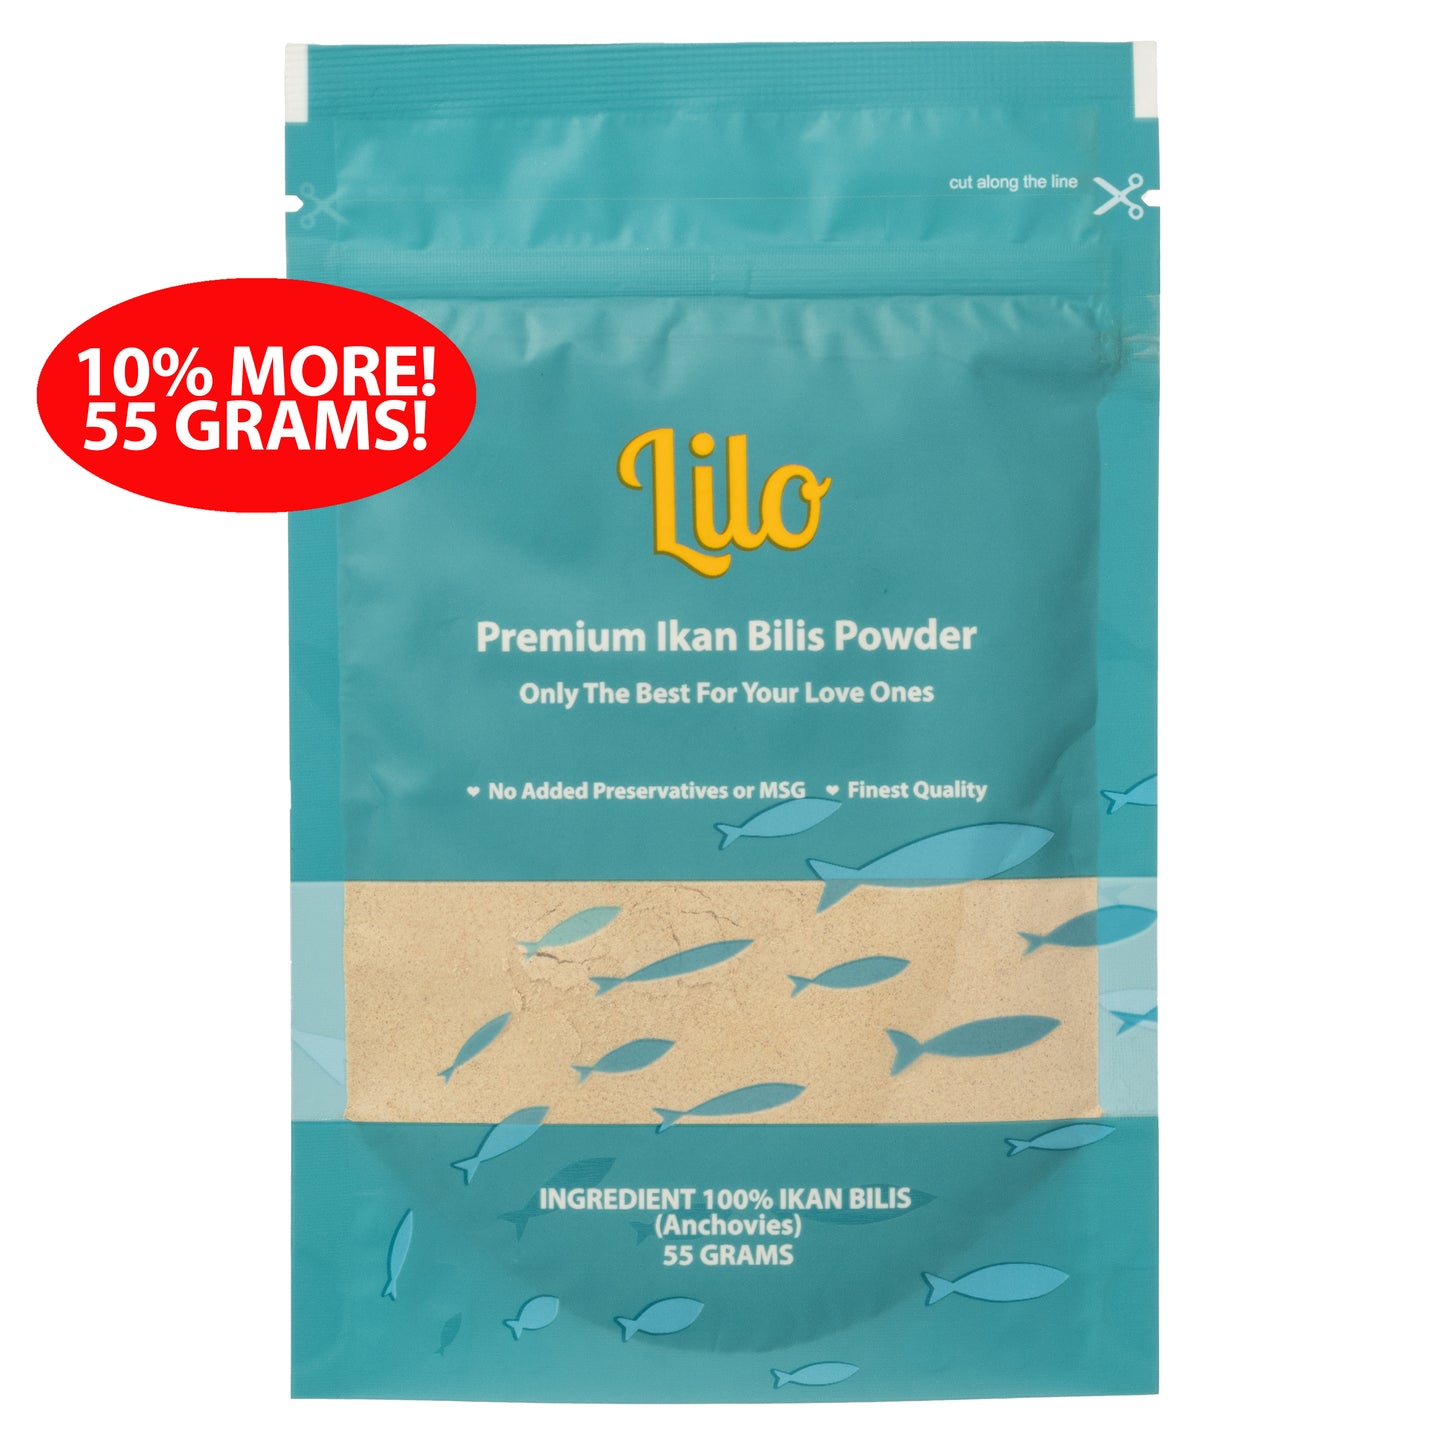 Lilo Premium Ikan Bilis Powder Resealable Refill Pack 55grams - Lilo Premium Ikan Bilis Powder